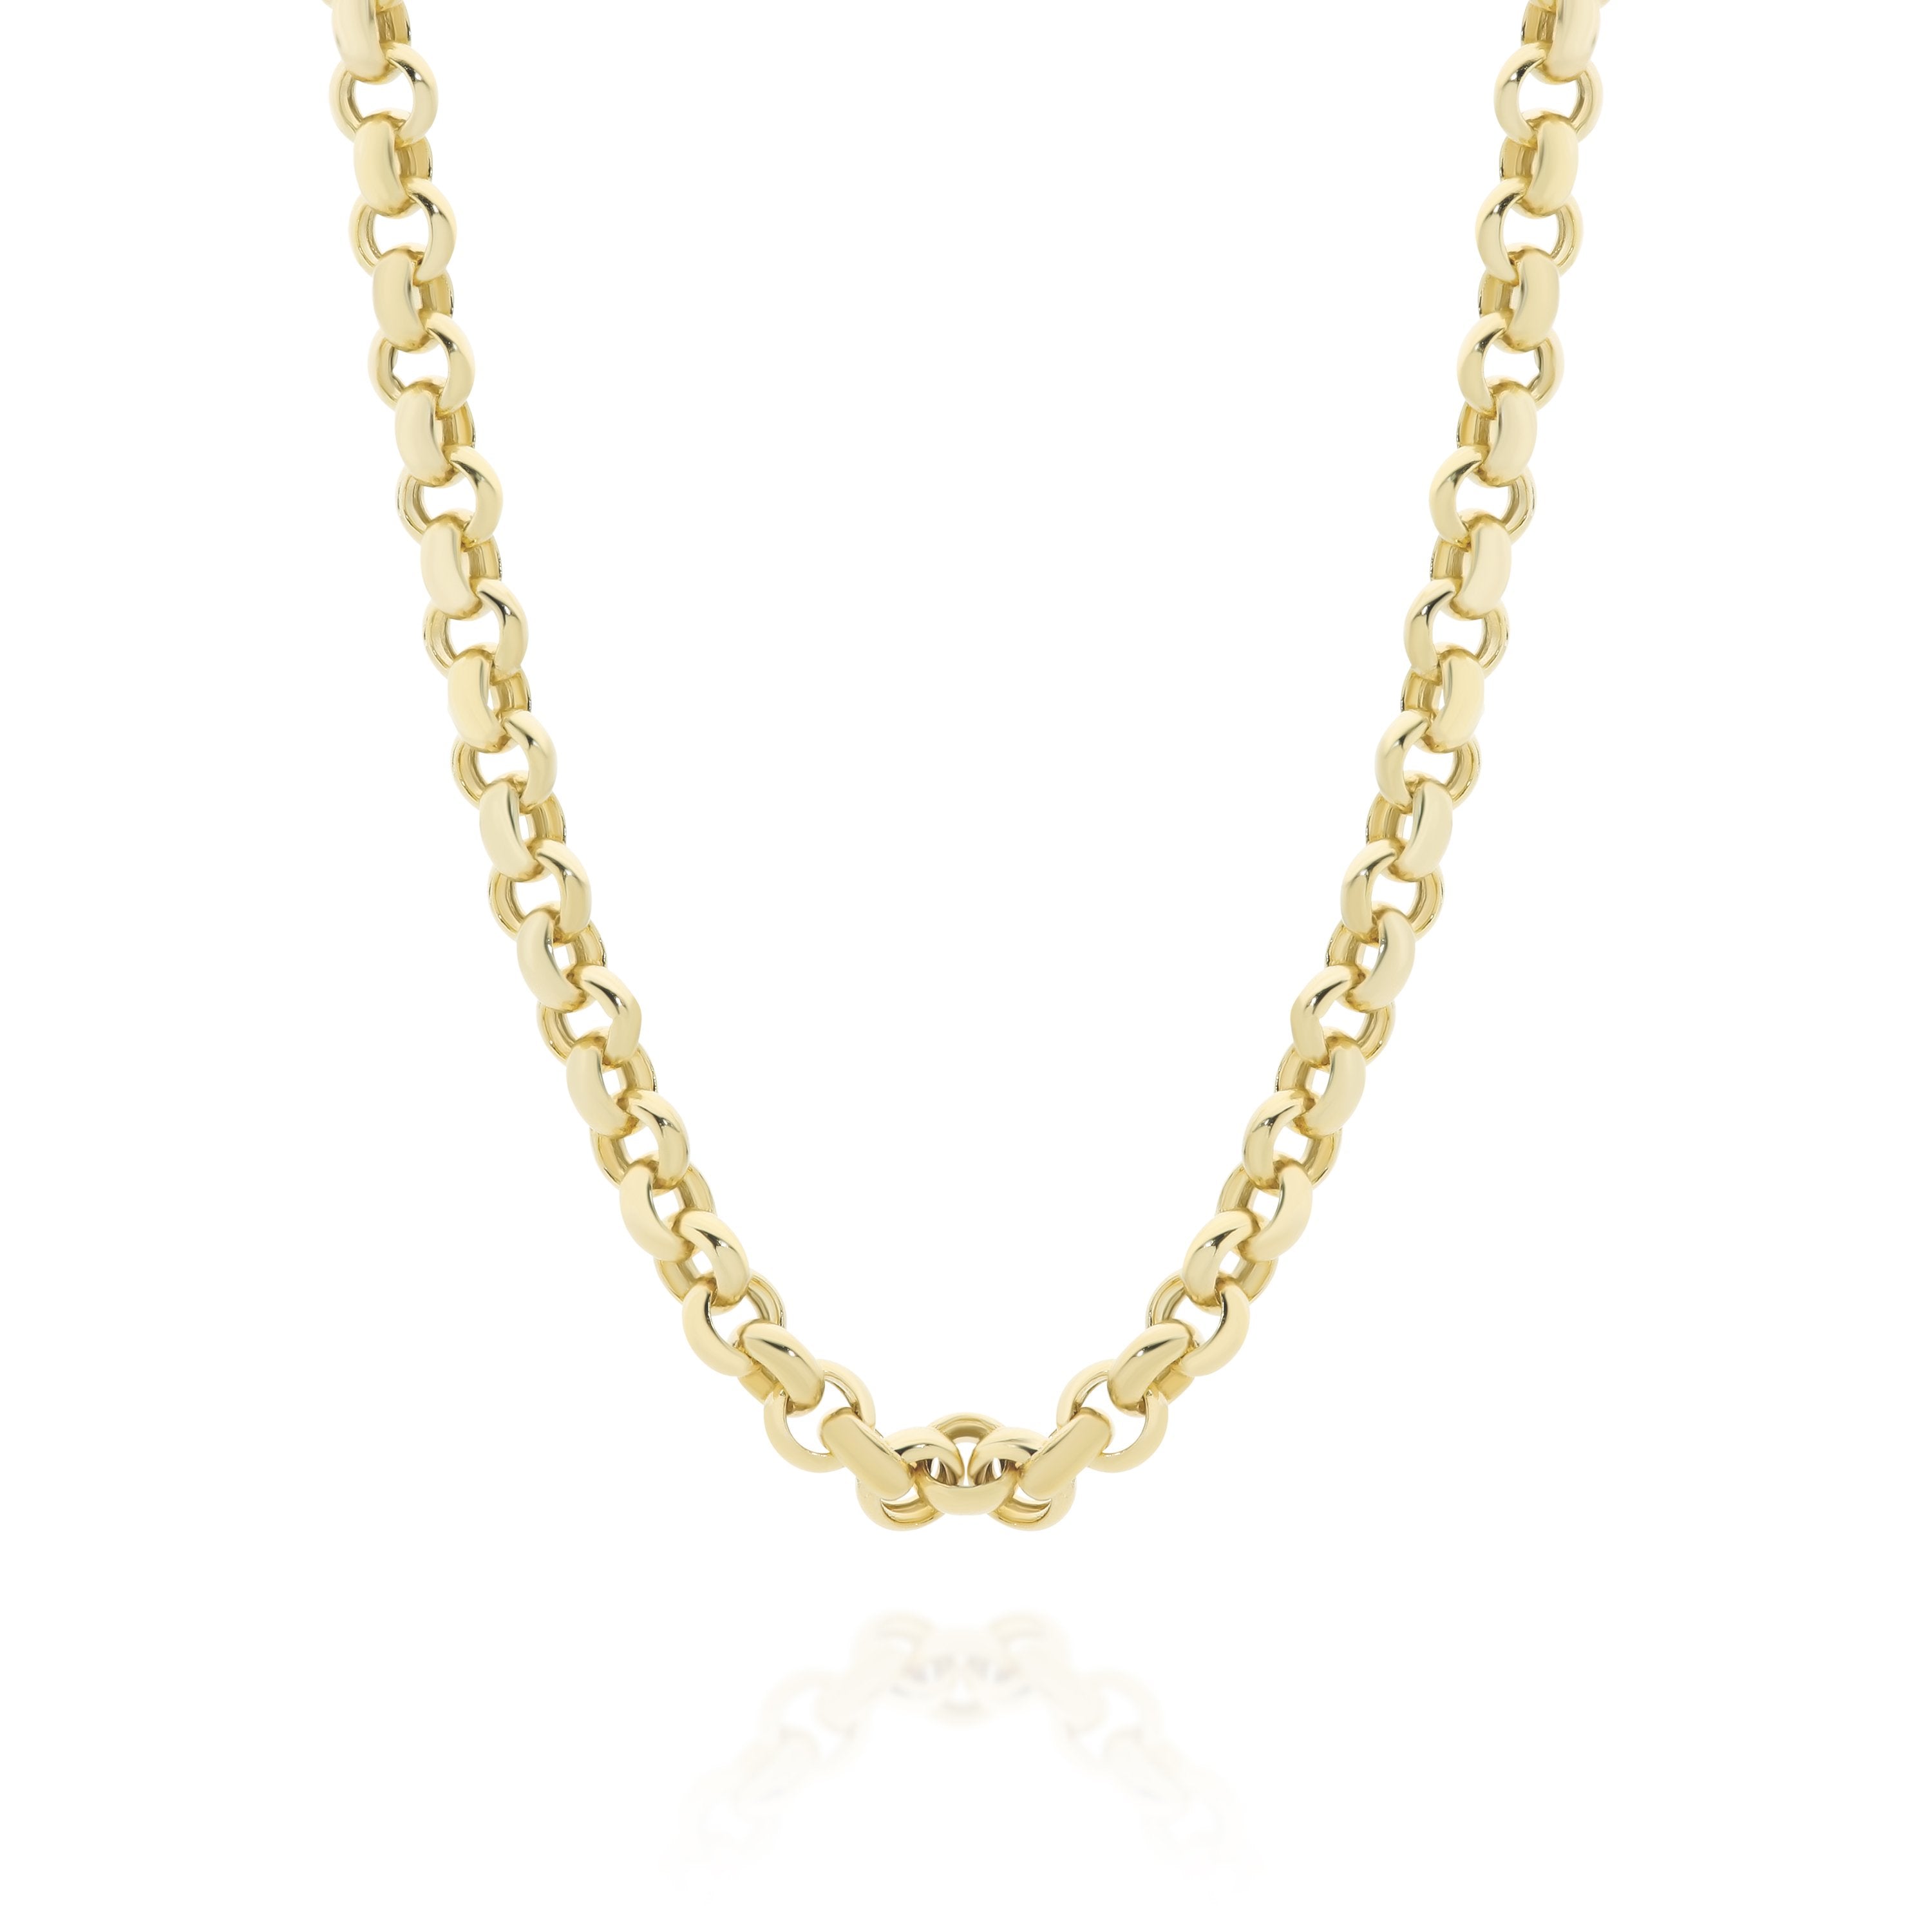 9ct gold necklace 46cm